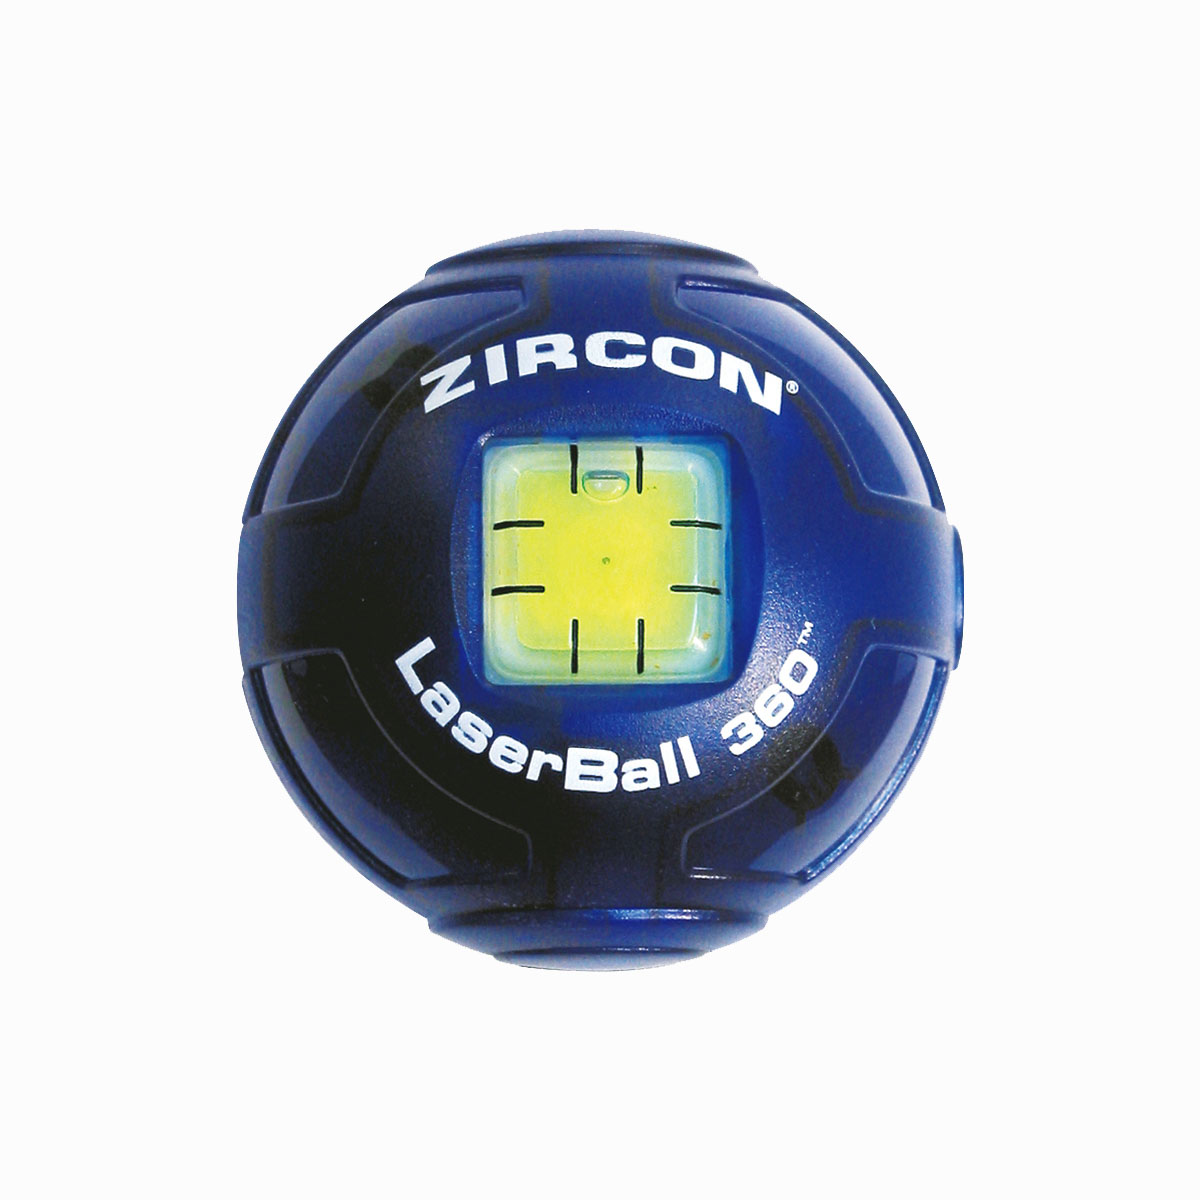 Zircon LaserBall 360